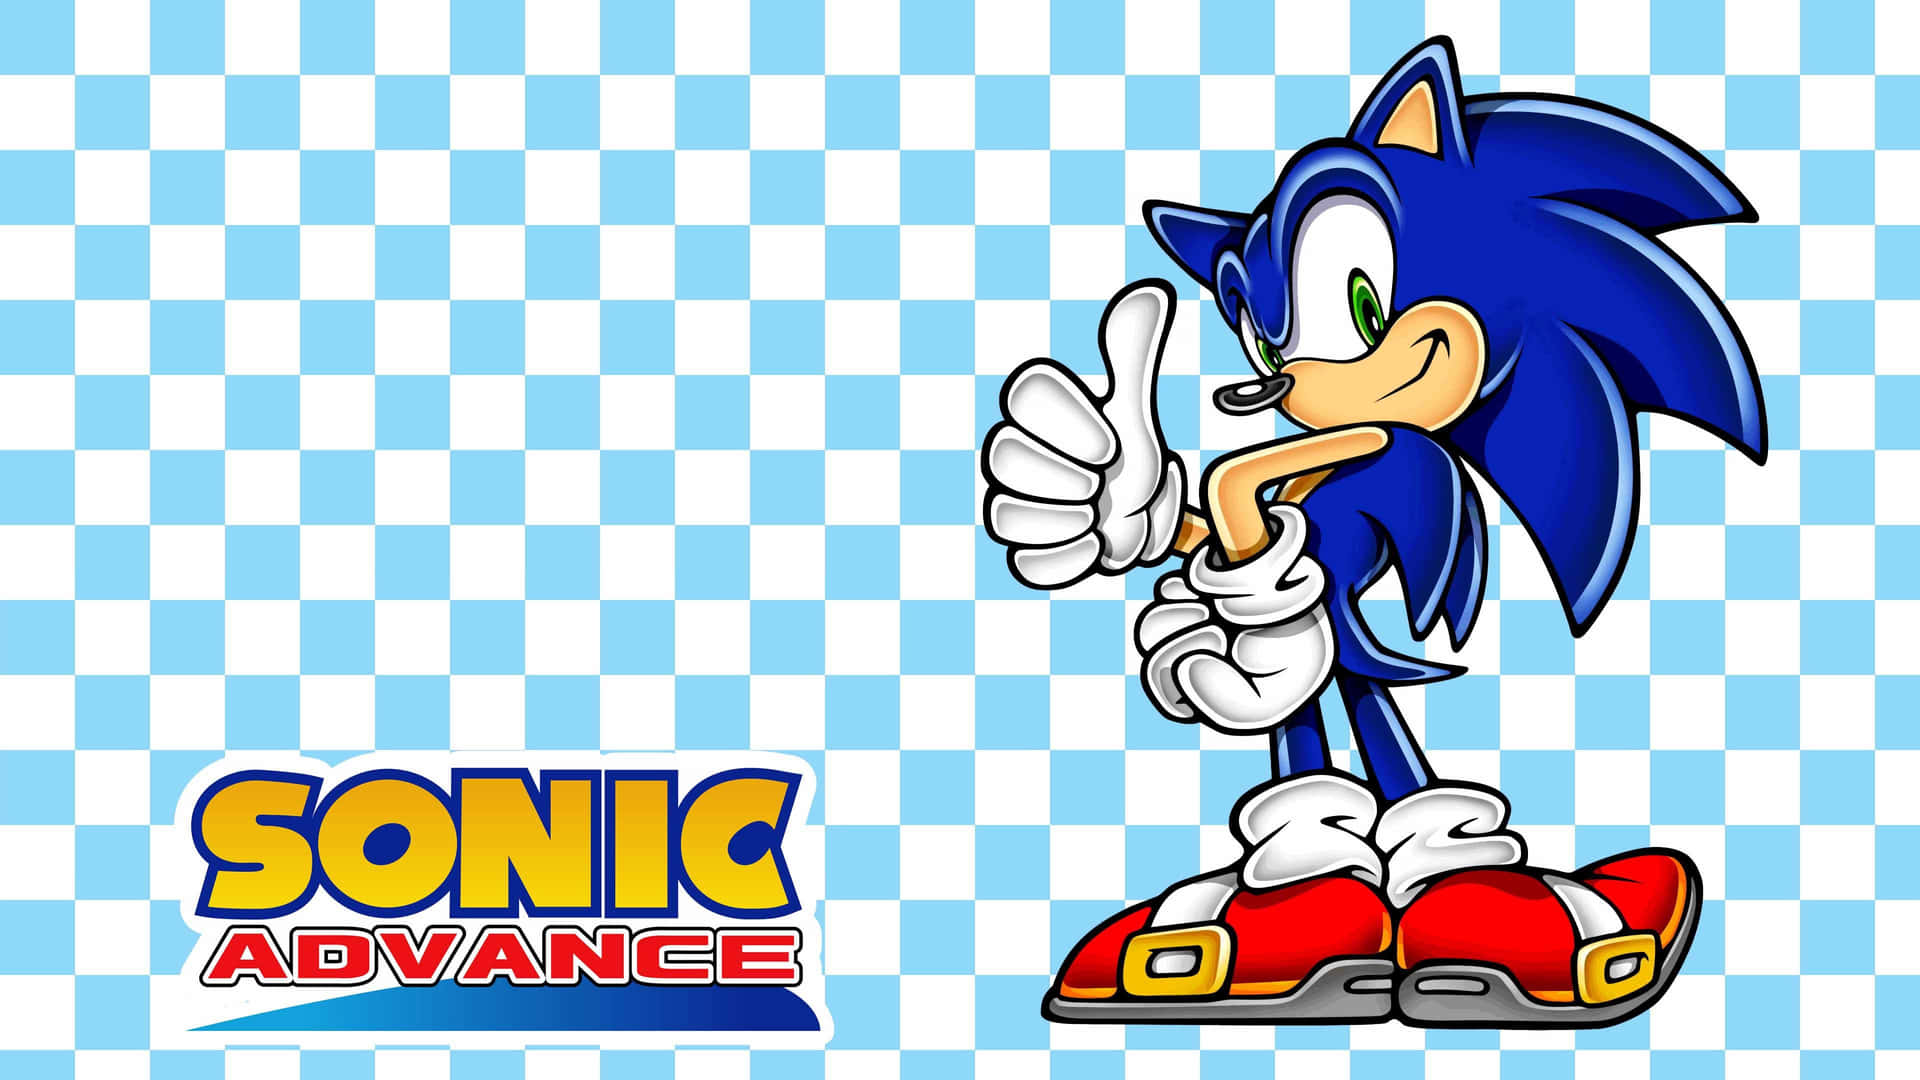 Sonic the Hedgehog Logo Wallpaper